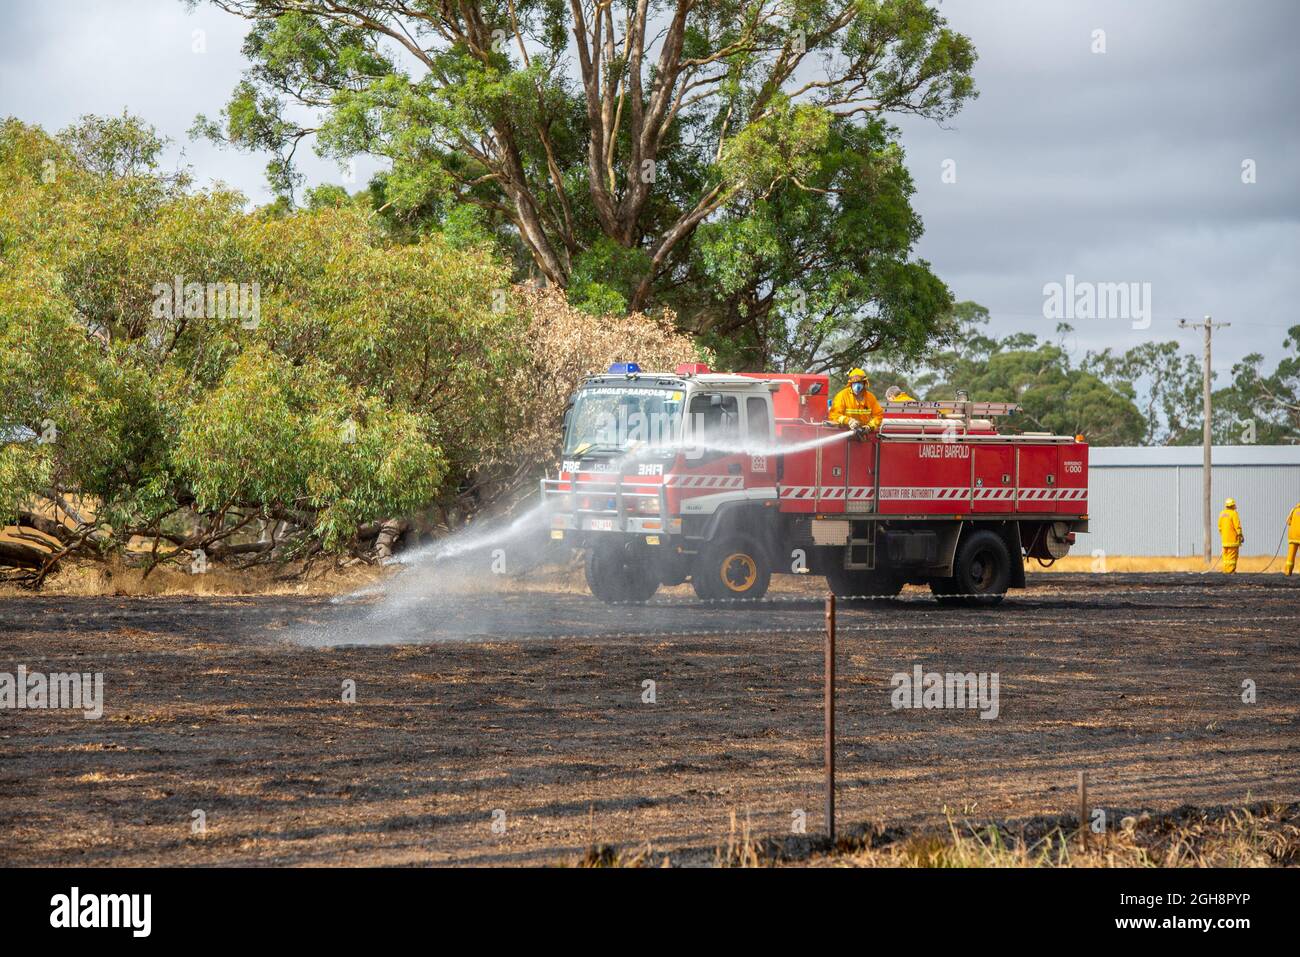 A fire appliance putting out a grass fire, Langley Barfold, Victoria, Australia. Stock Photo